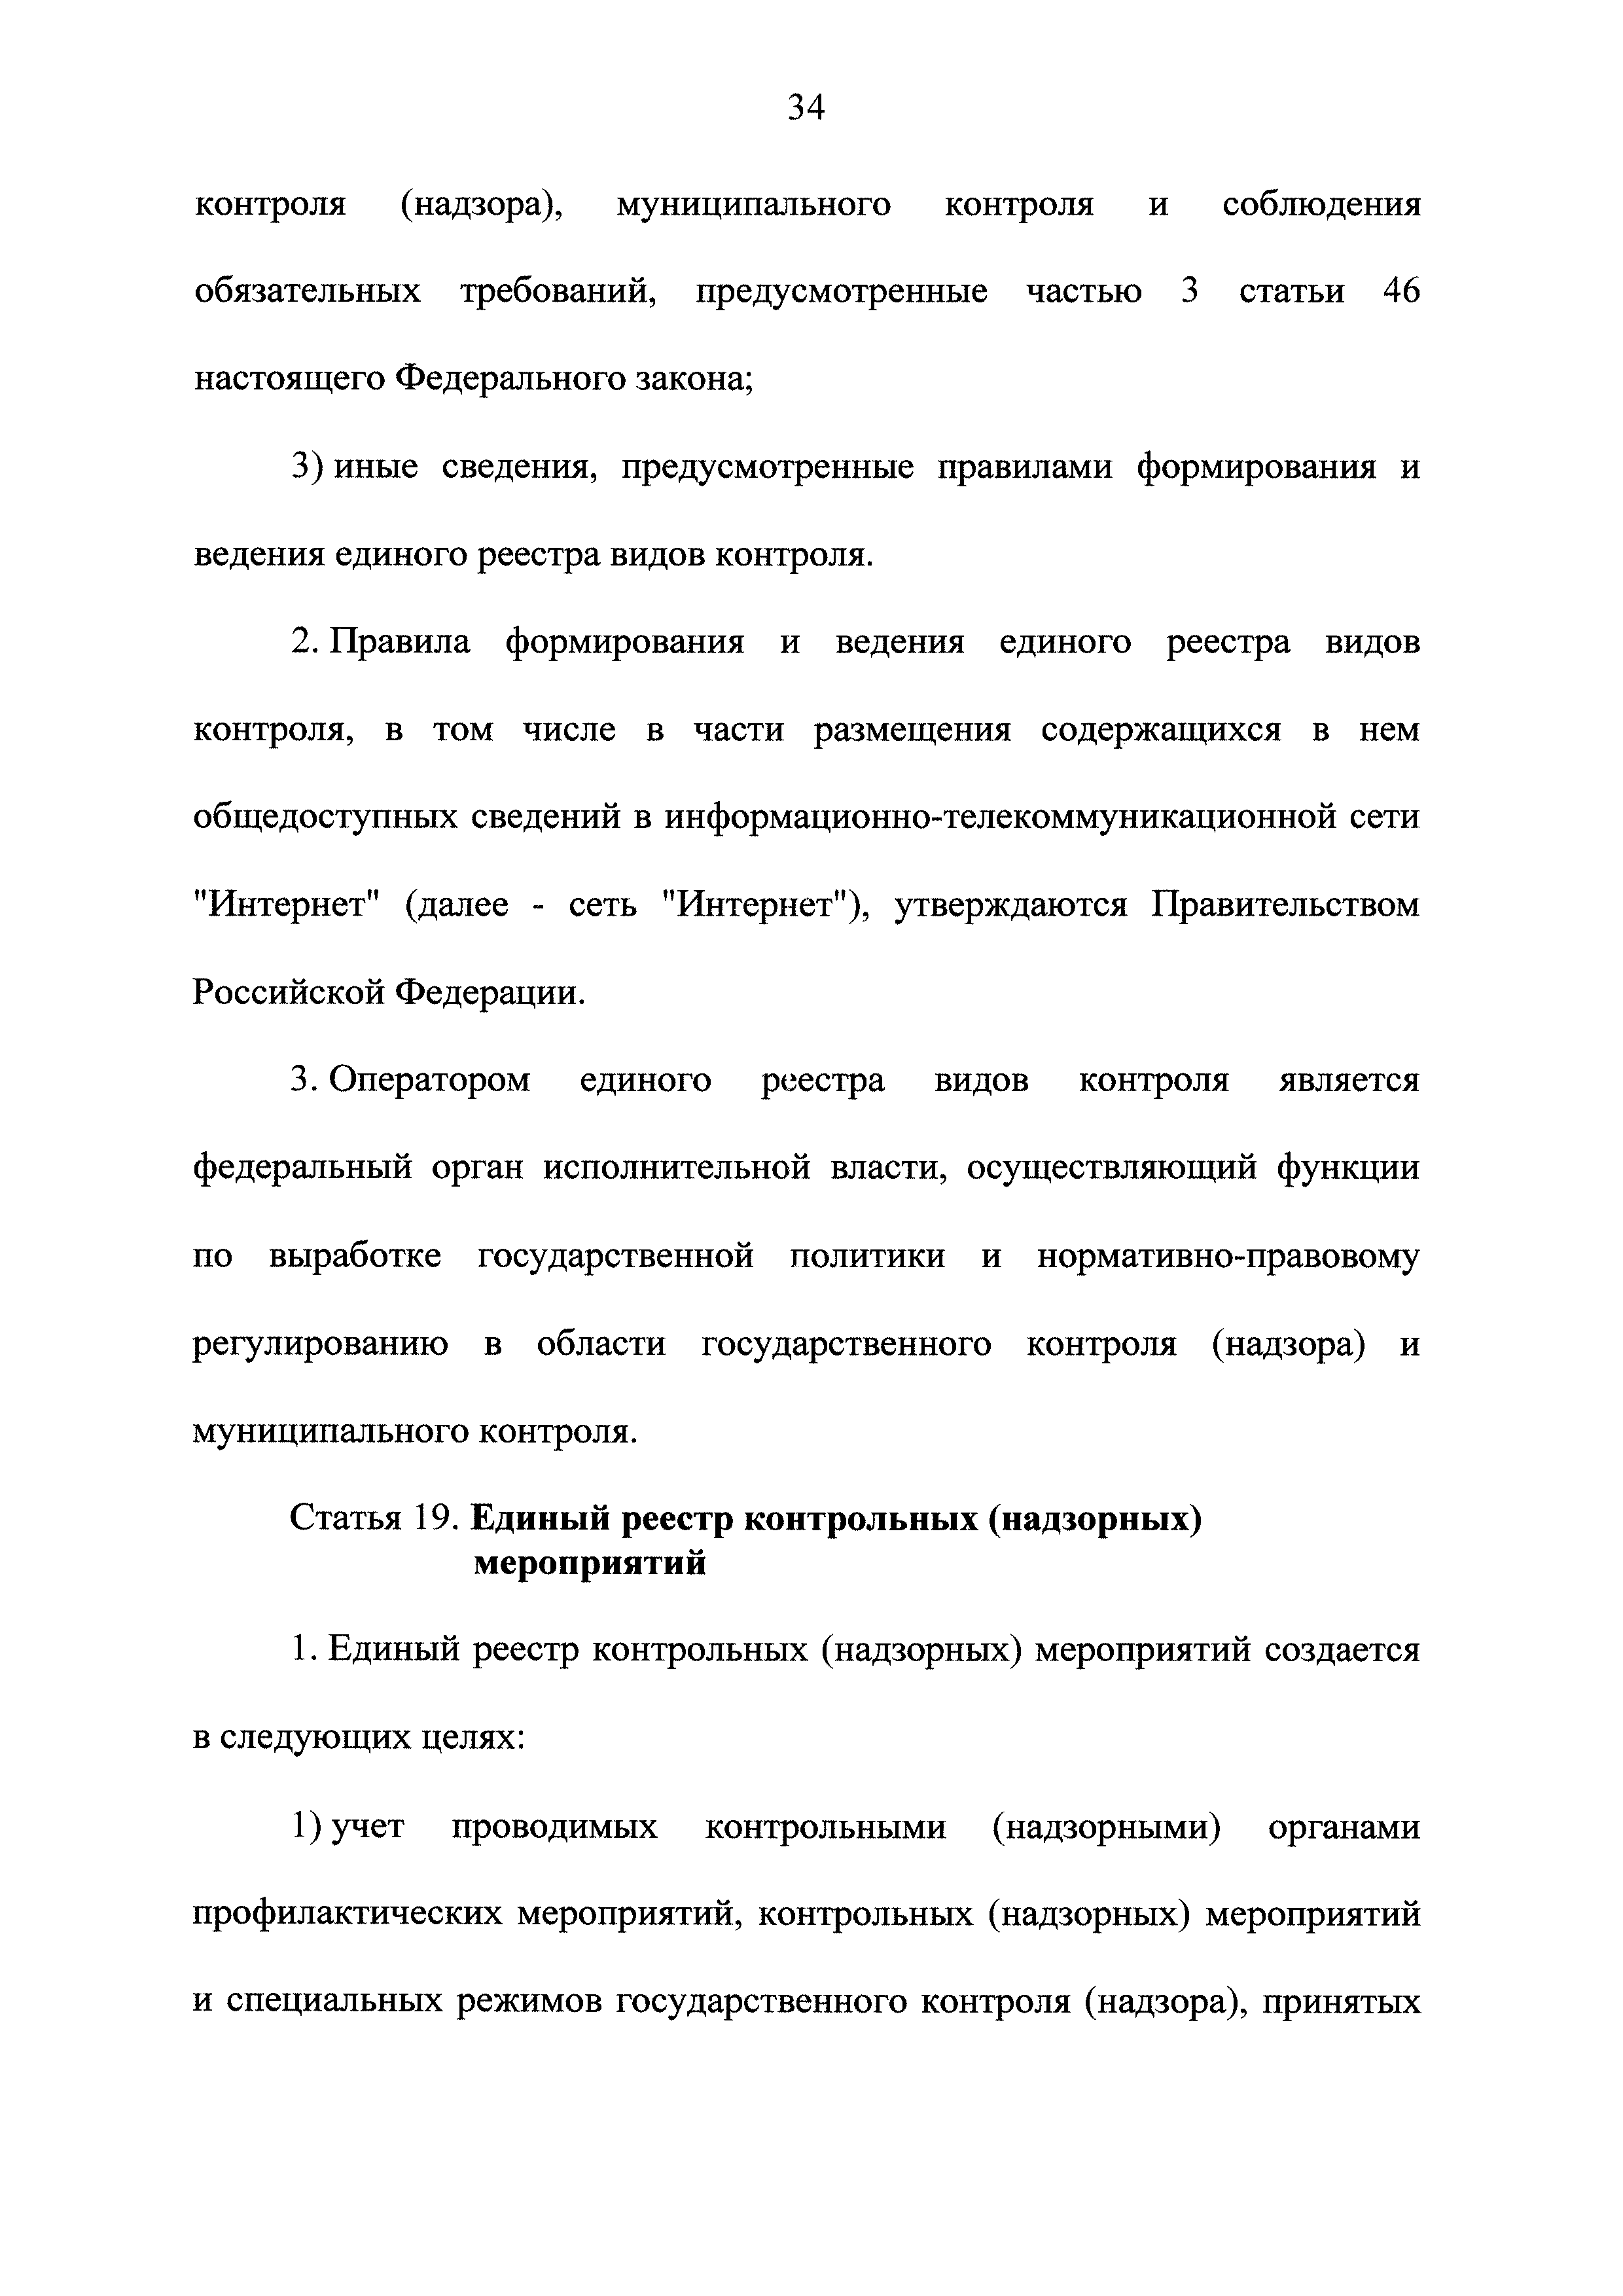 13 14 Статья устава вс РФ.